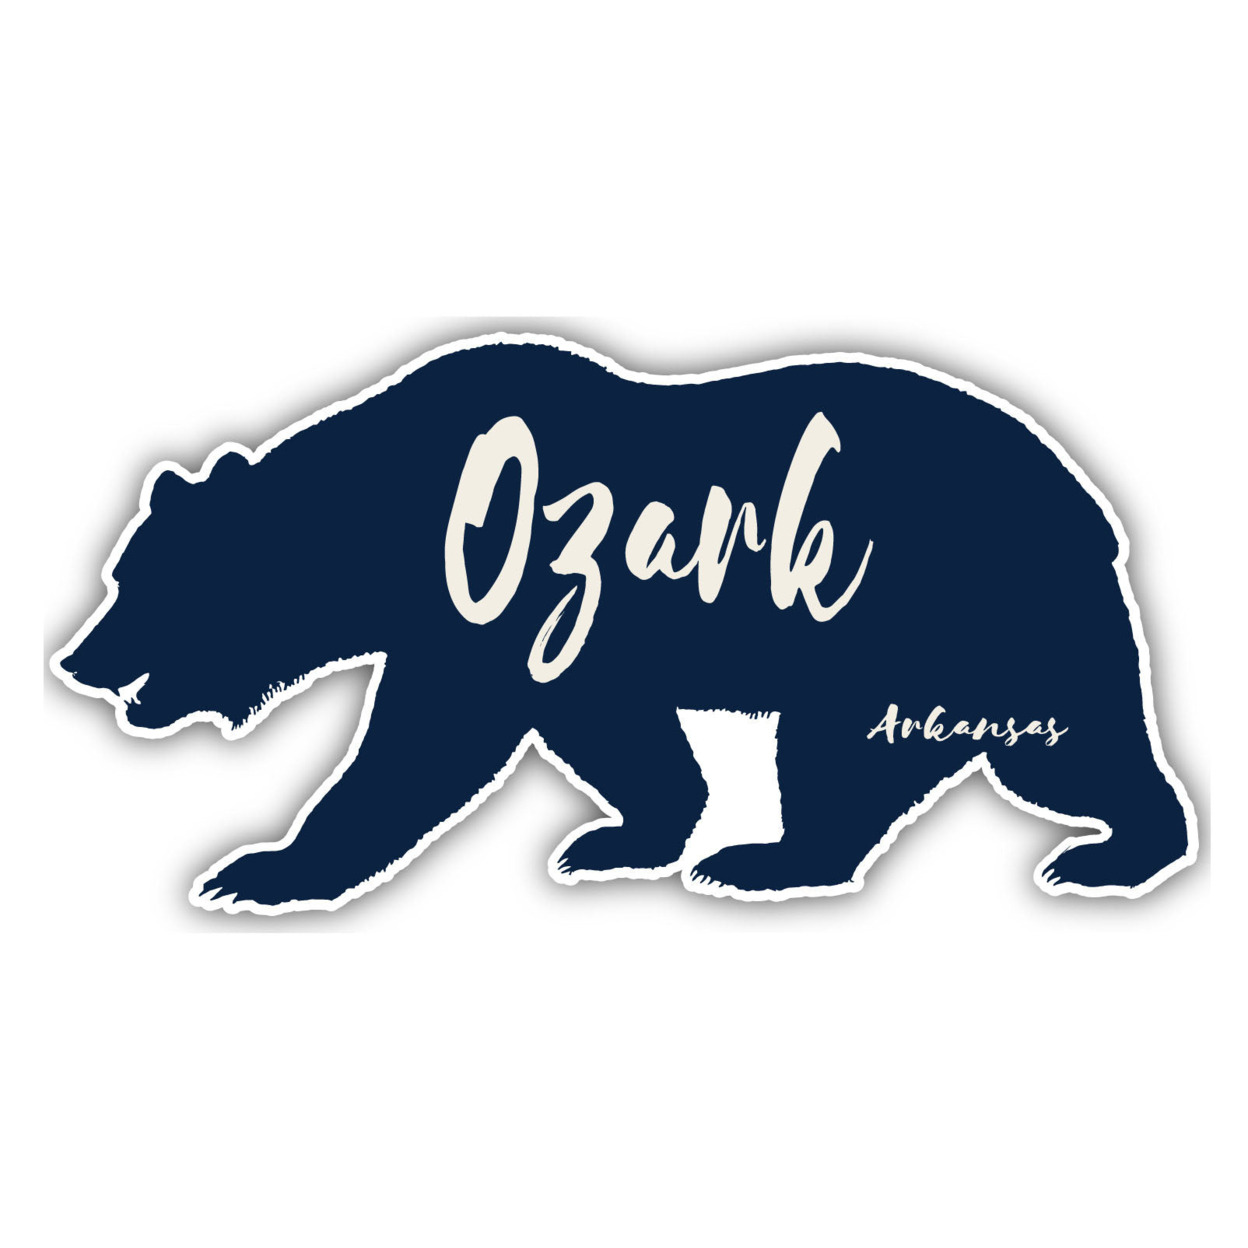 Ozark Arkansas Souvenir Decorative Stickers (Choose Theme And Size) - Single Unit, 4-Inch, Adventures Awaits